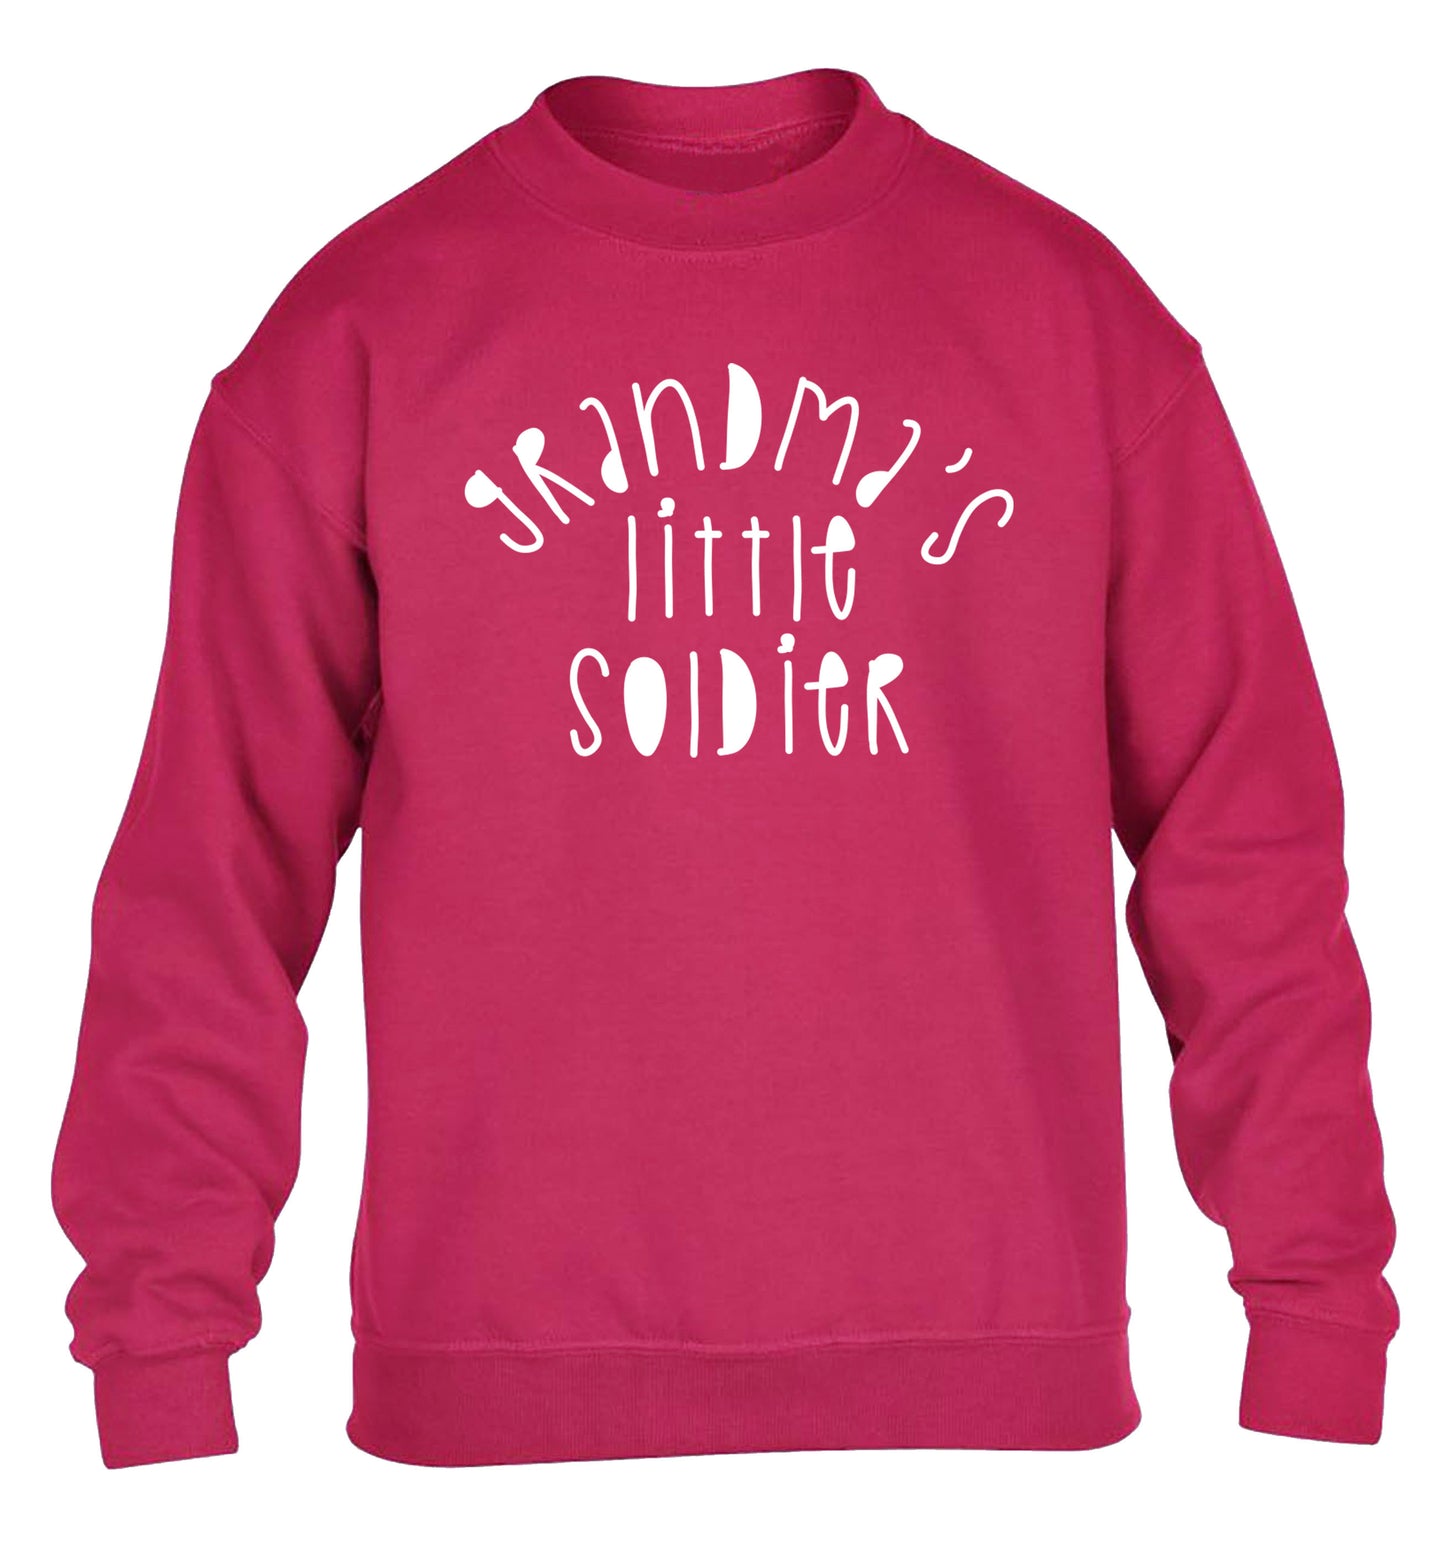 Grandma's little soldier children's pink sweater 12-14 Years